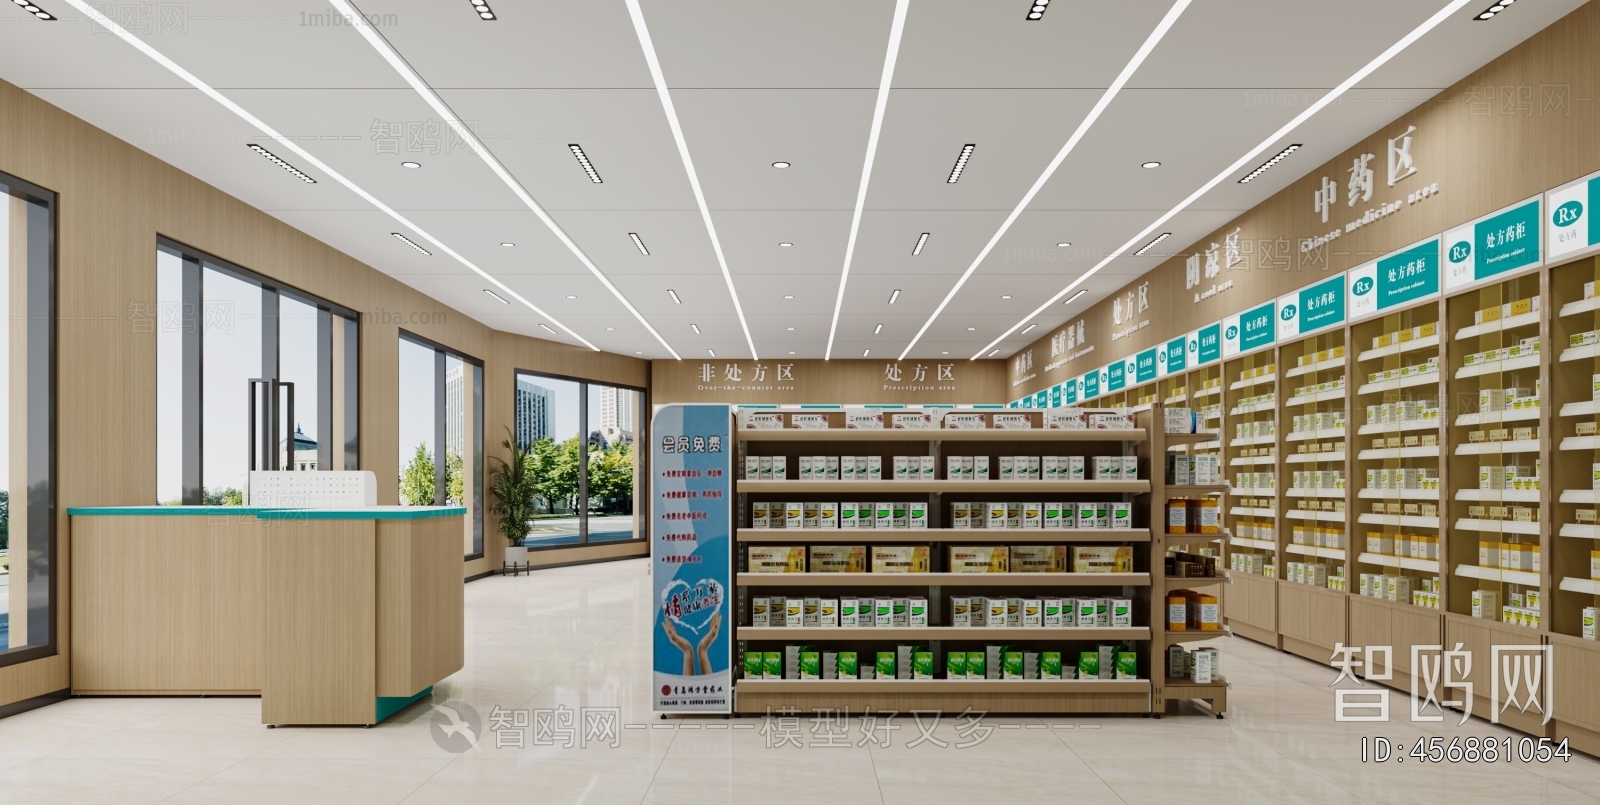 Modern Pharmacy